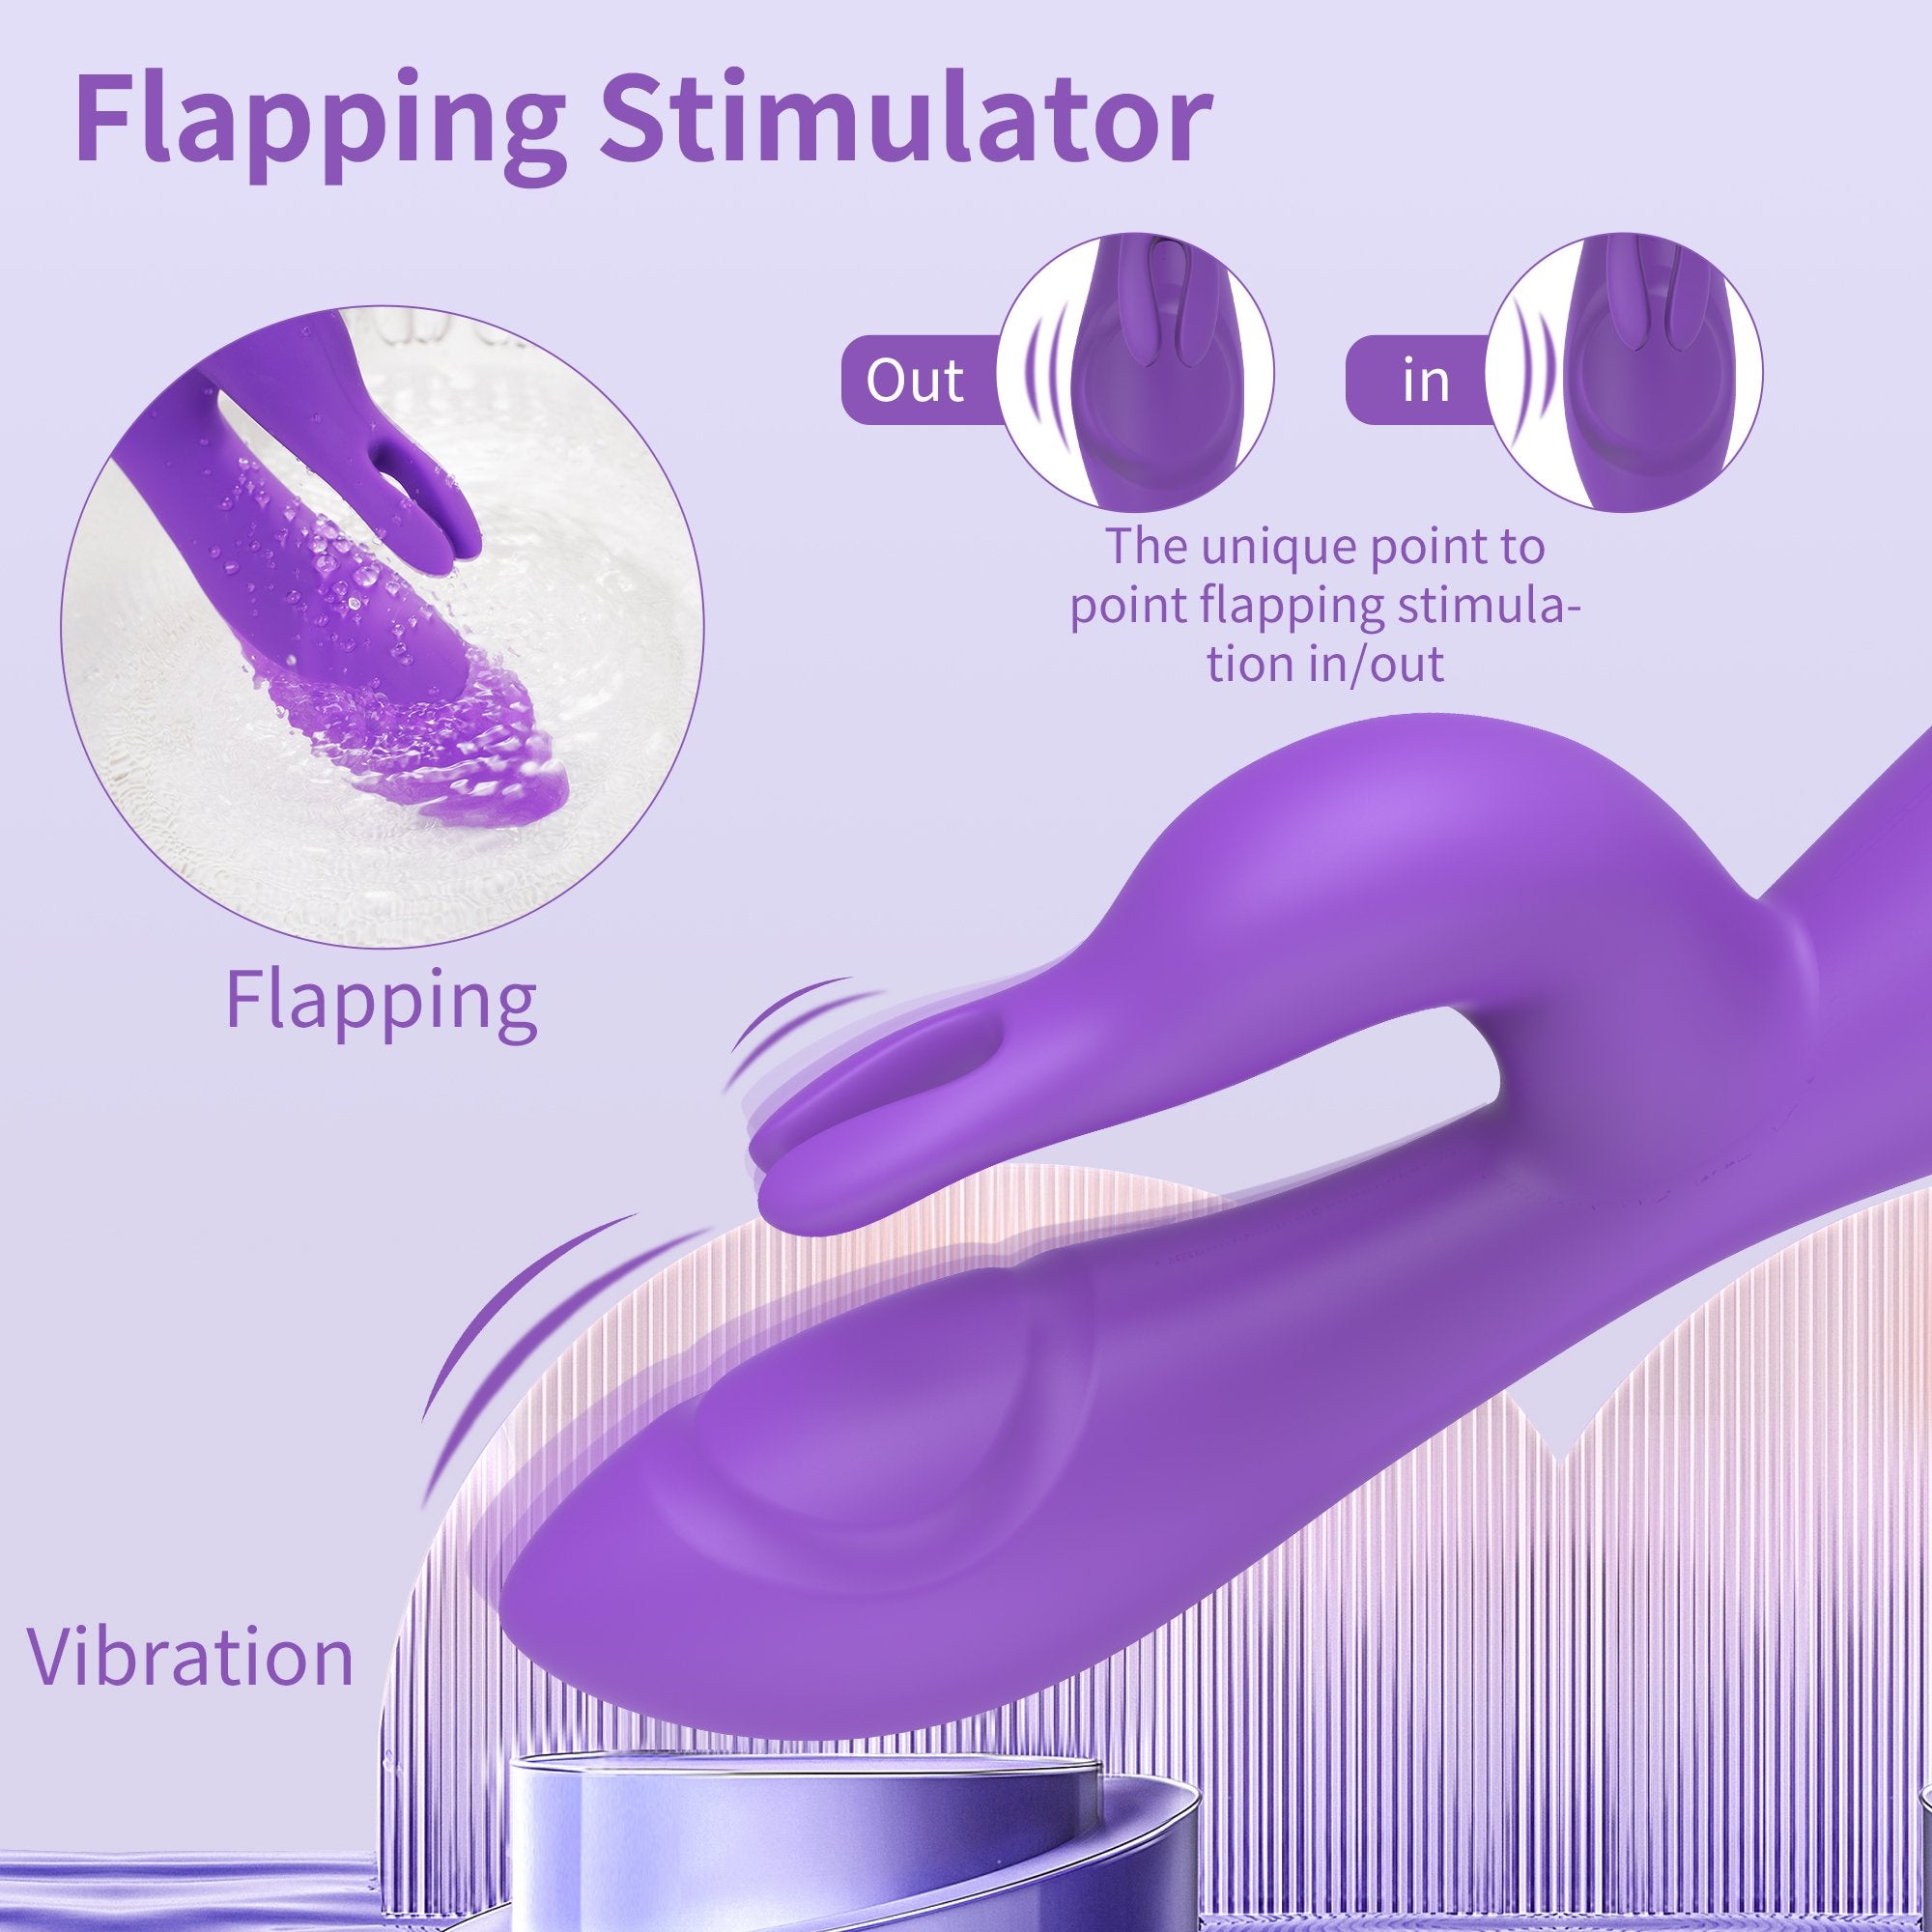 FIDECH G-Spot Tapping Rabbit Vibrator